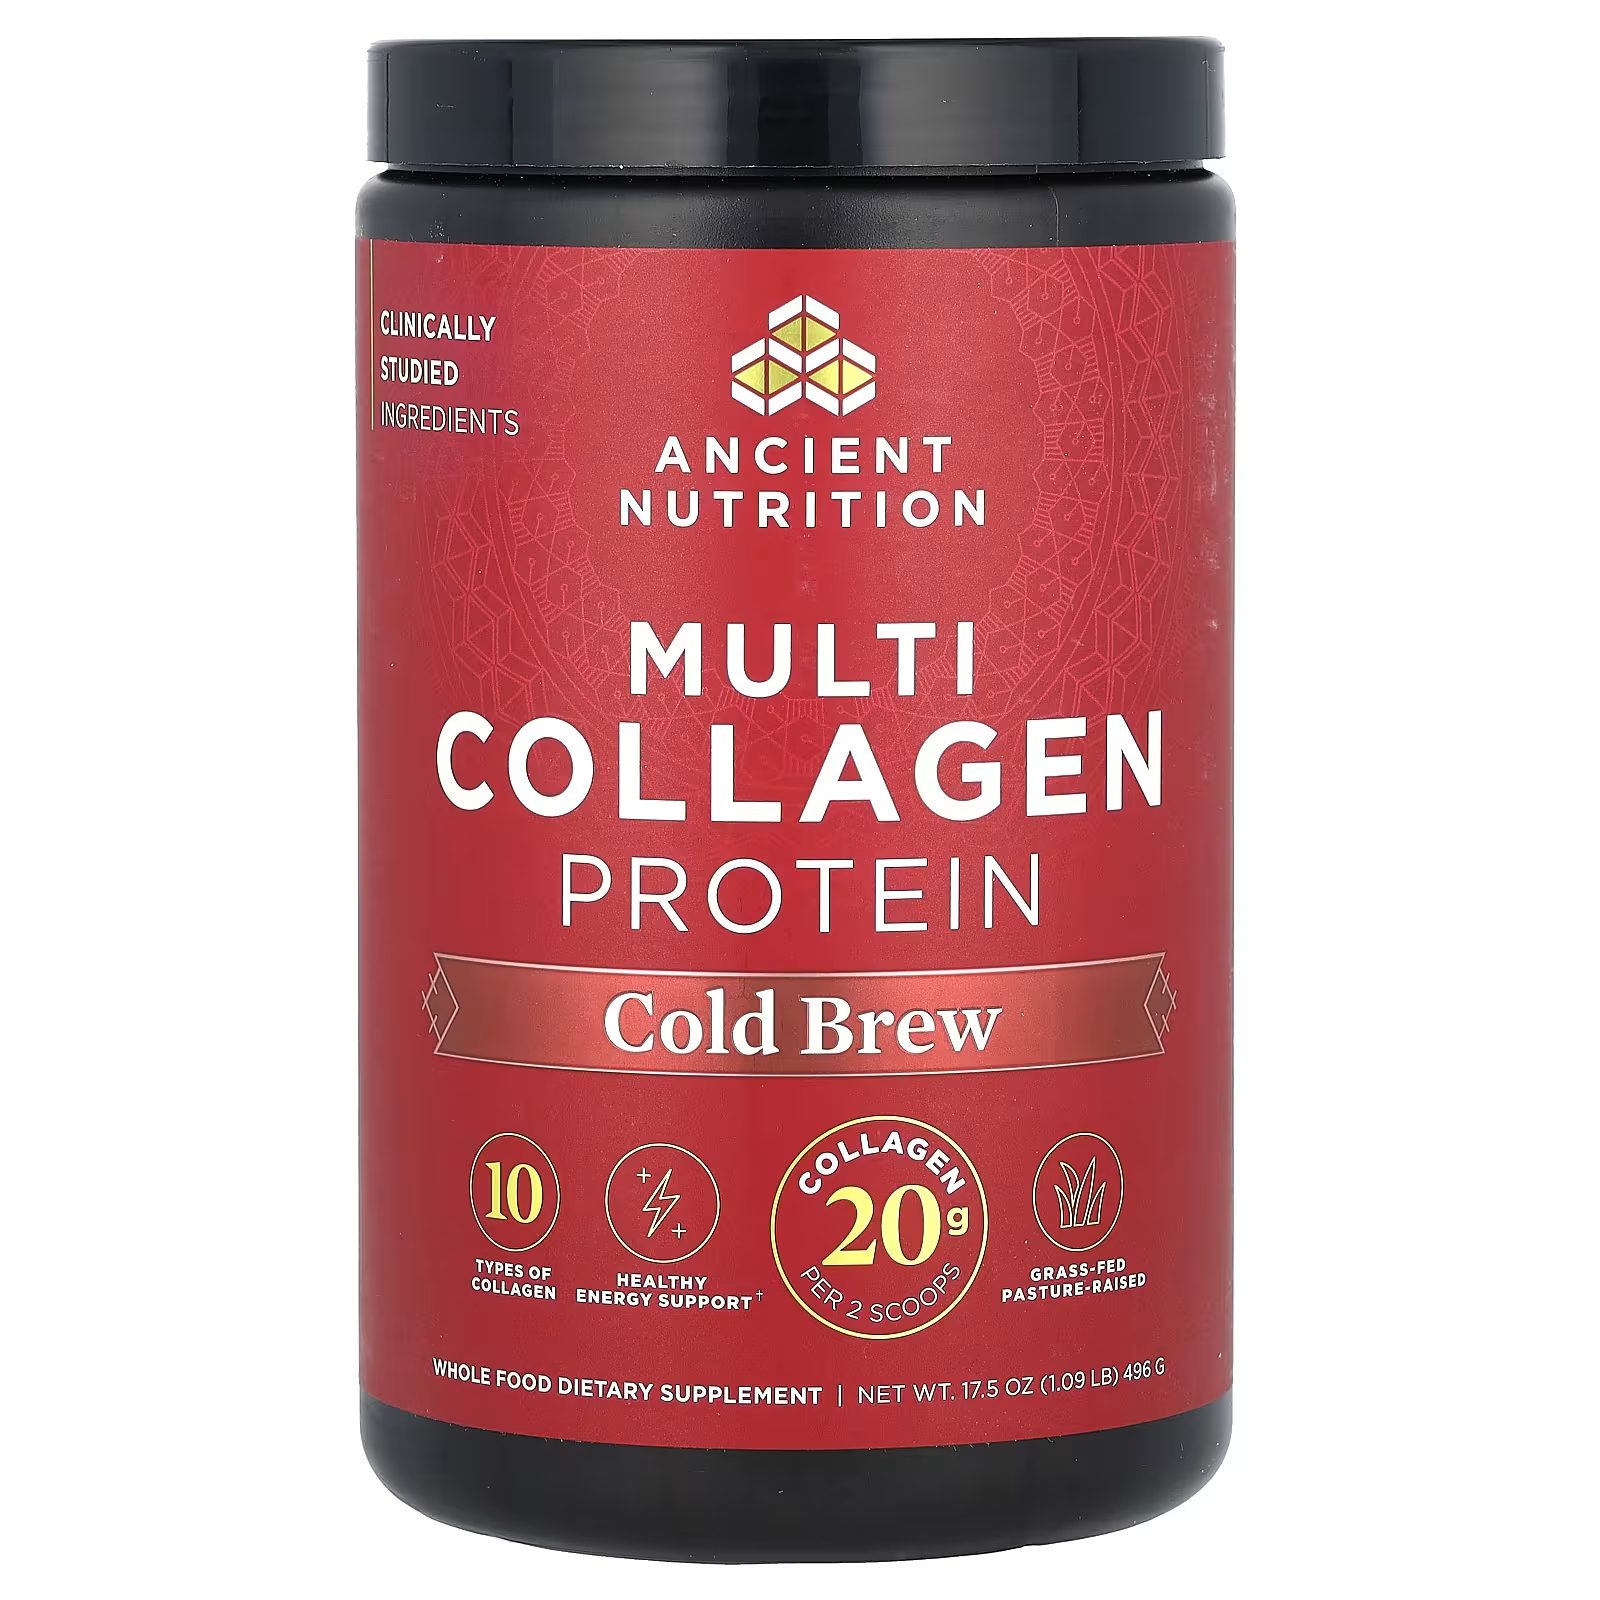 Пищевая добавка Ancient Nutrition Multi Collagen Protein Cold Brew, 496 г пищевая добавка ancient nutrition multi collagen protein клубничный лимонад 273 6 г